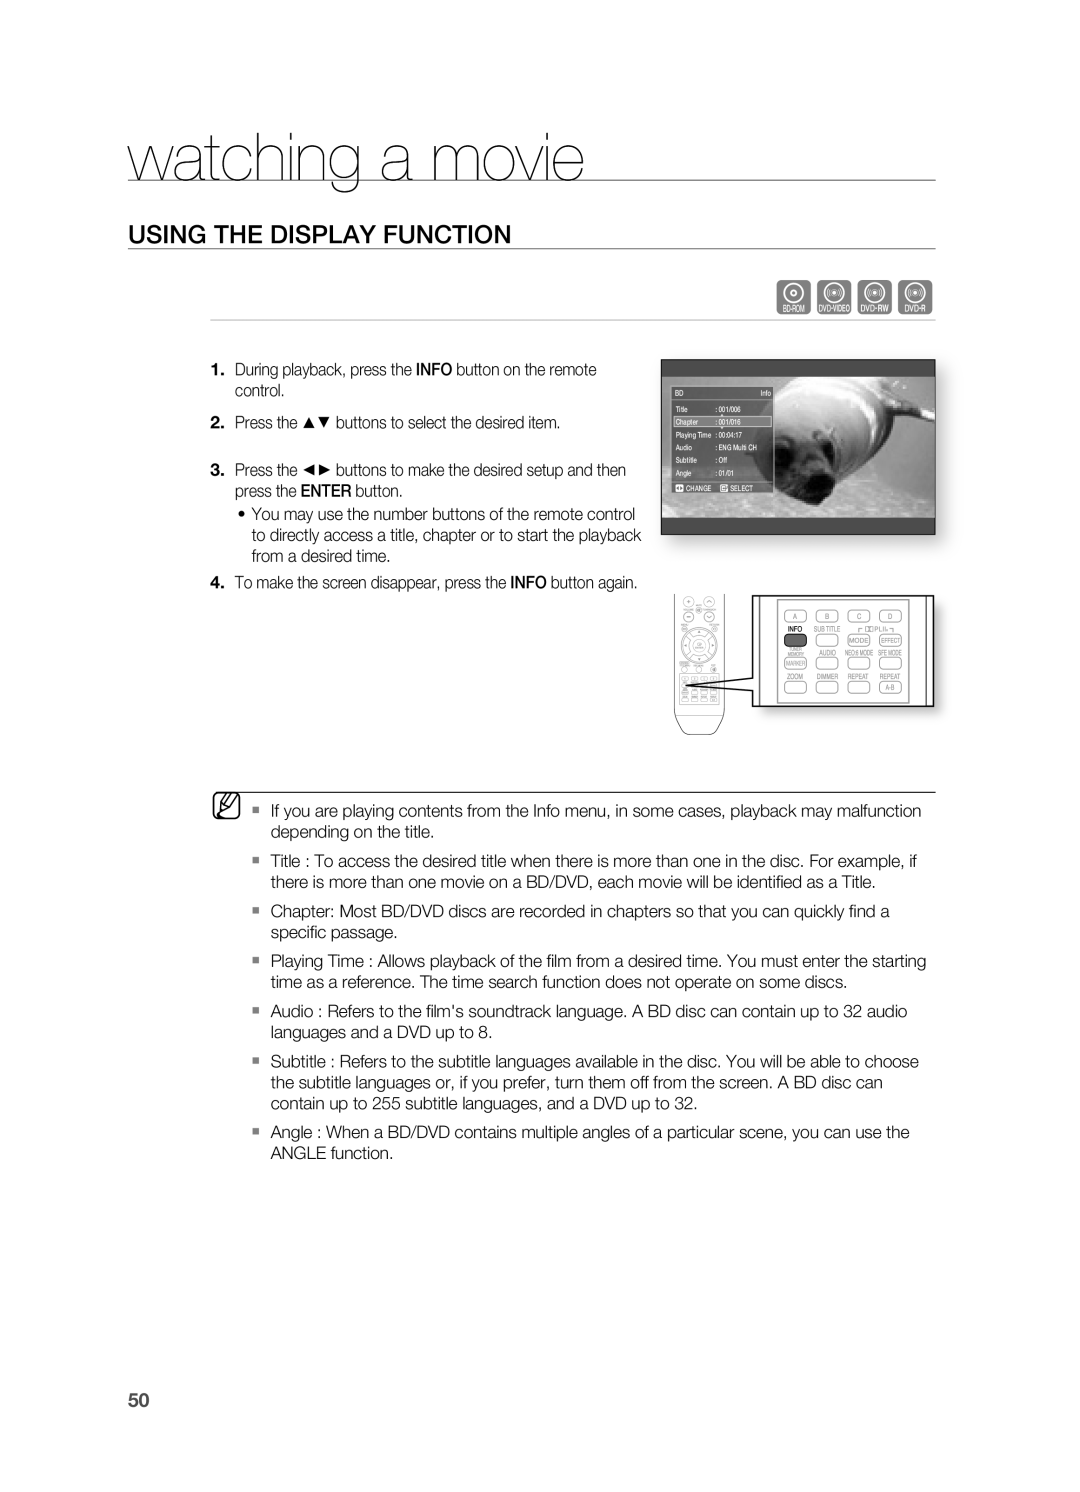 Samsung AH68-02019S manual watching a movie, USIng THE DISPLAY FUnCTIOn, hZCV 